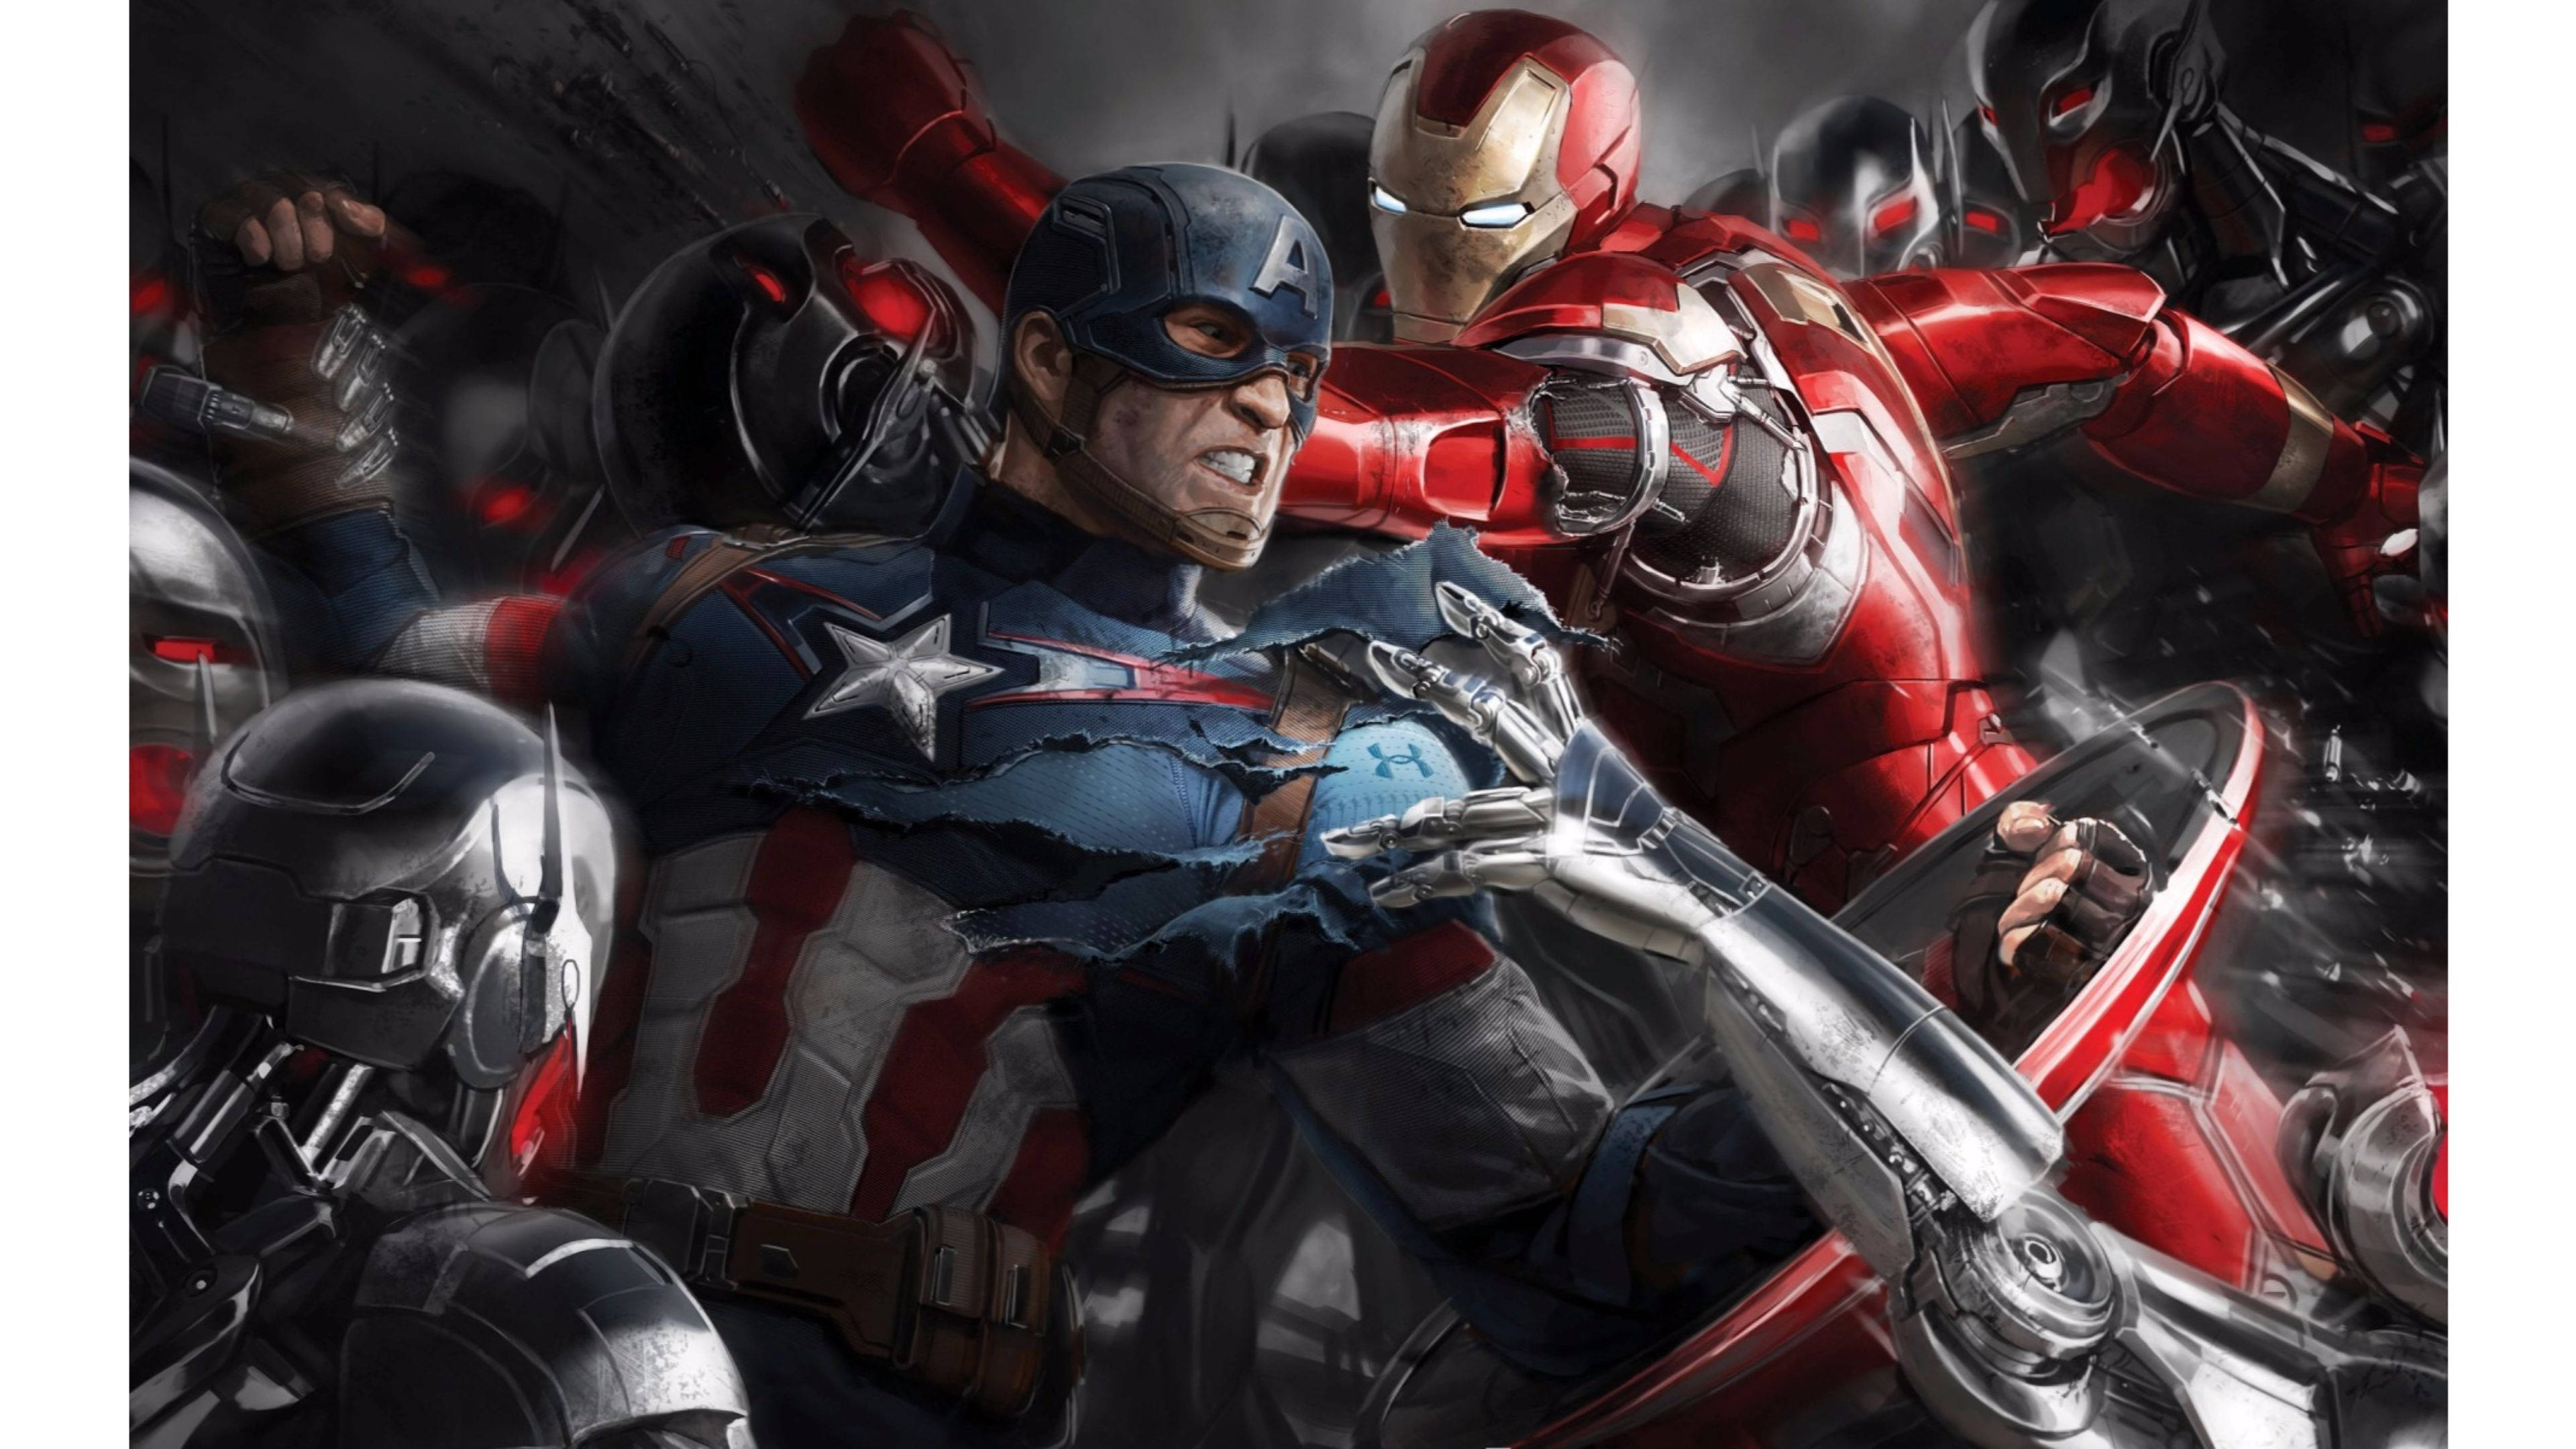 Download Captain America Wallpaper